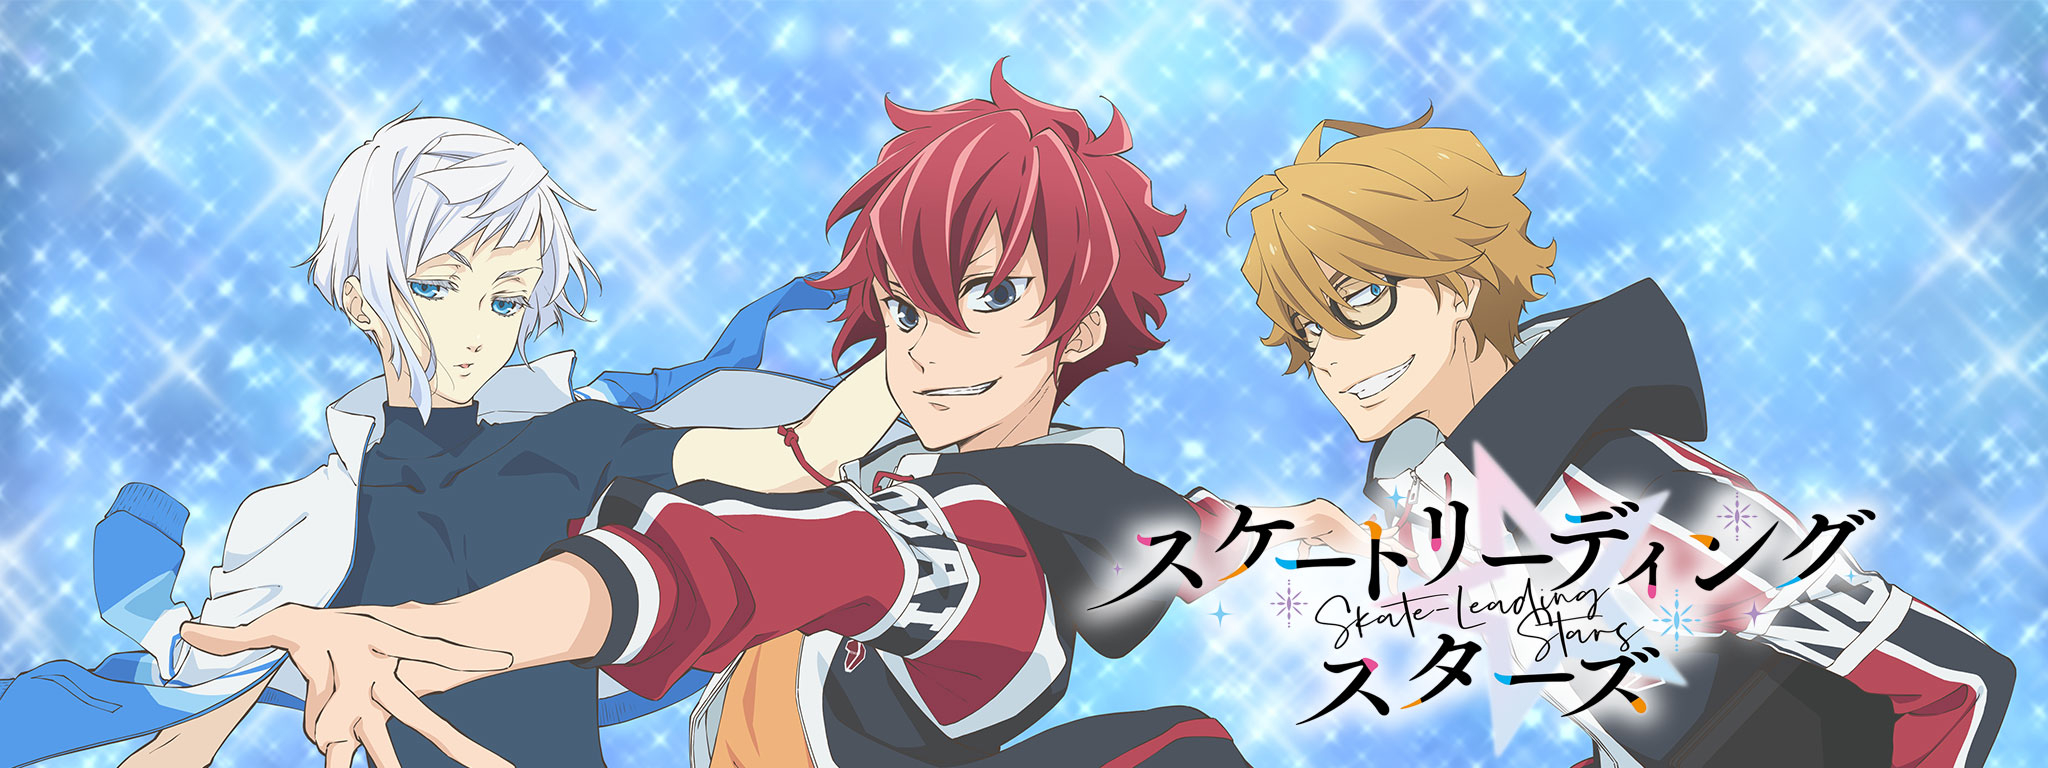 Skate-Leading Stars - QooApp: Anime Games Platform